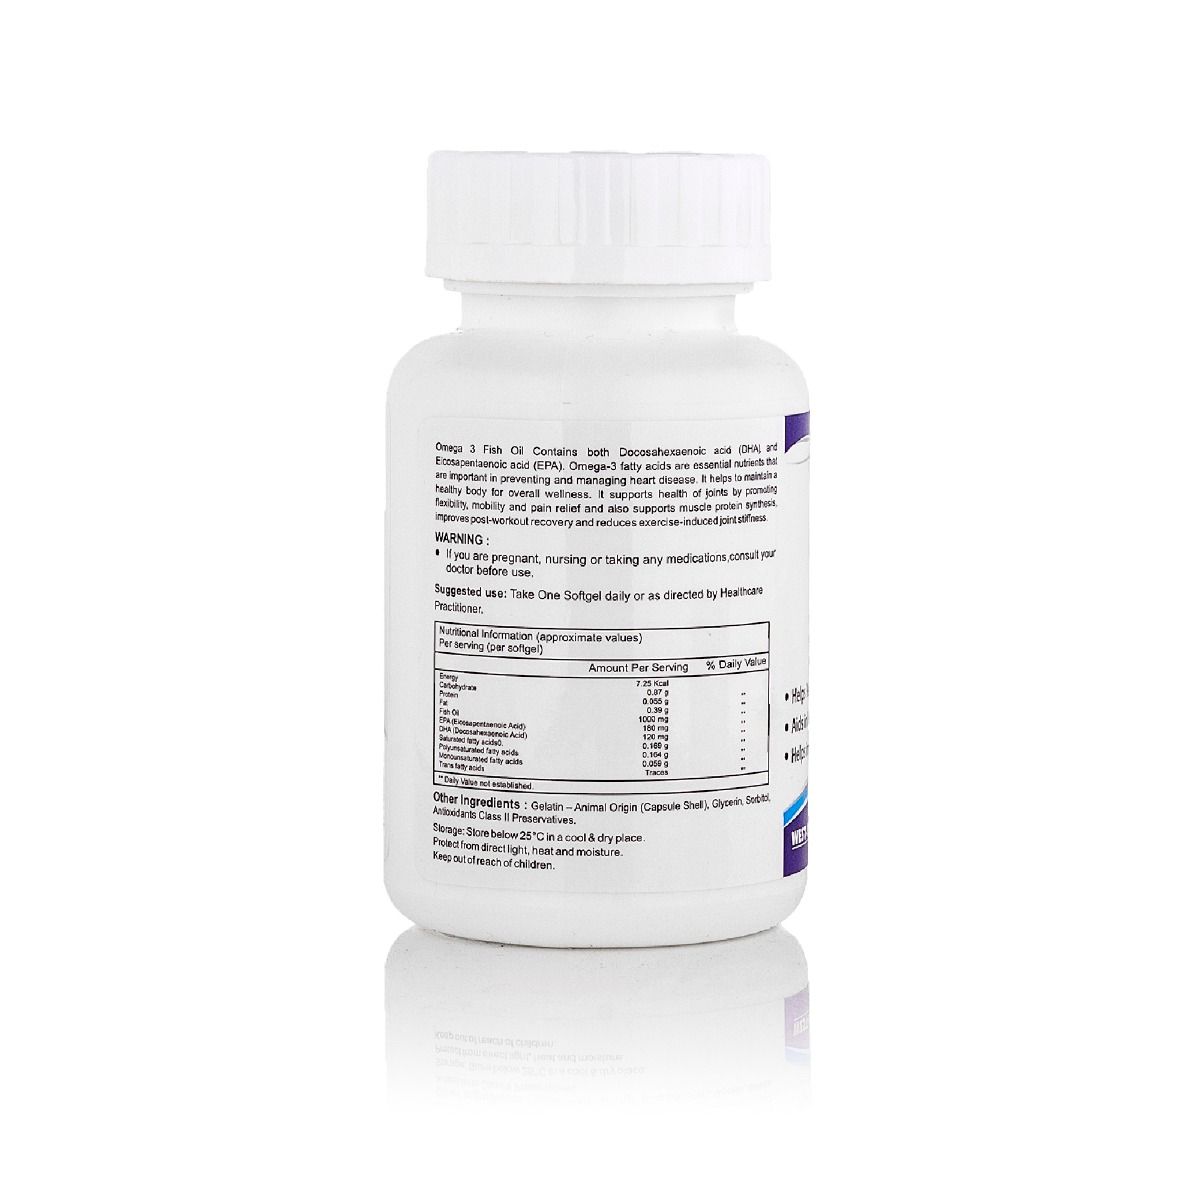 Healthvit Omega-3 Fish Oil 1000 mg, 60 Softgels, Pack of 1 